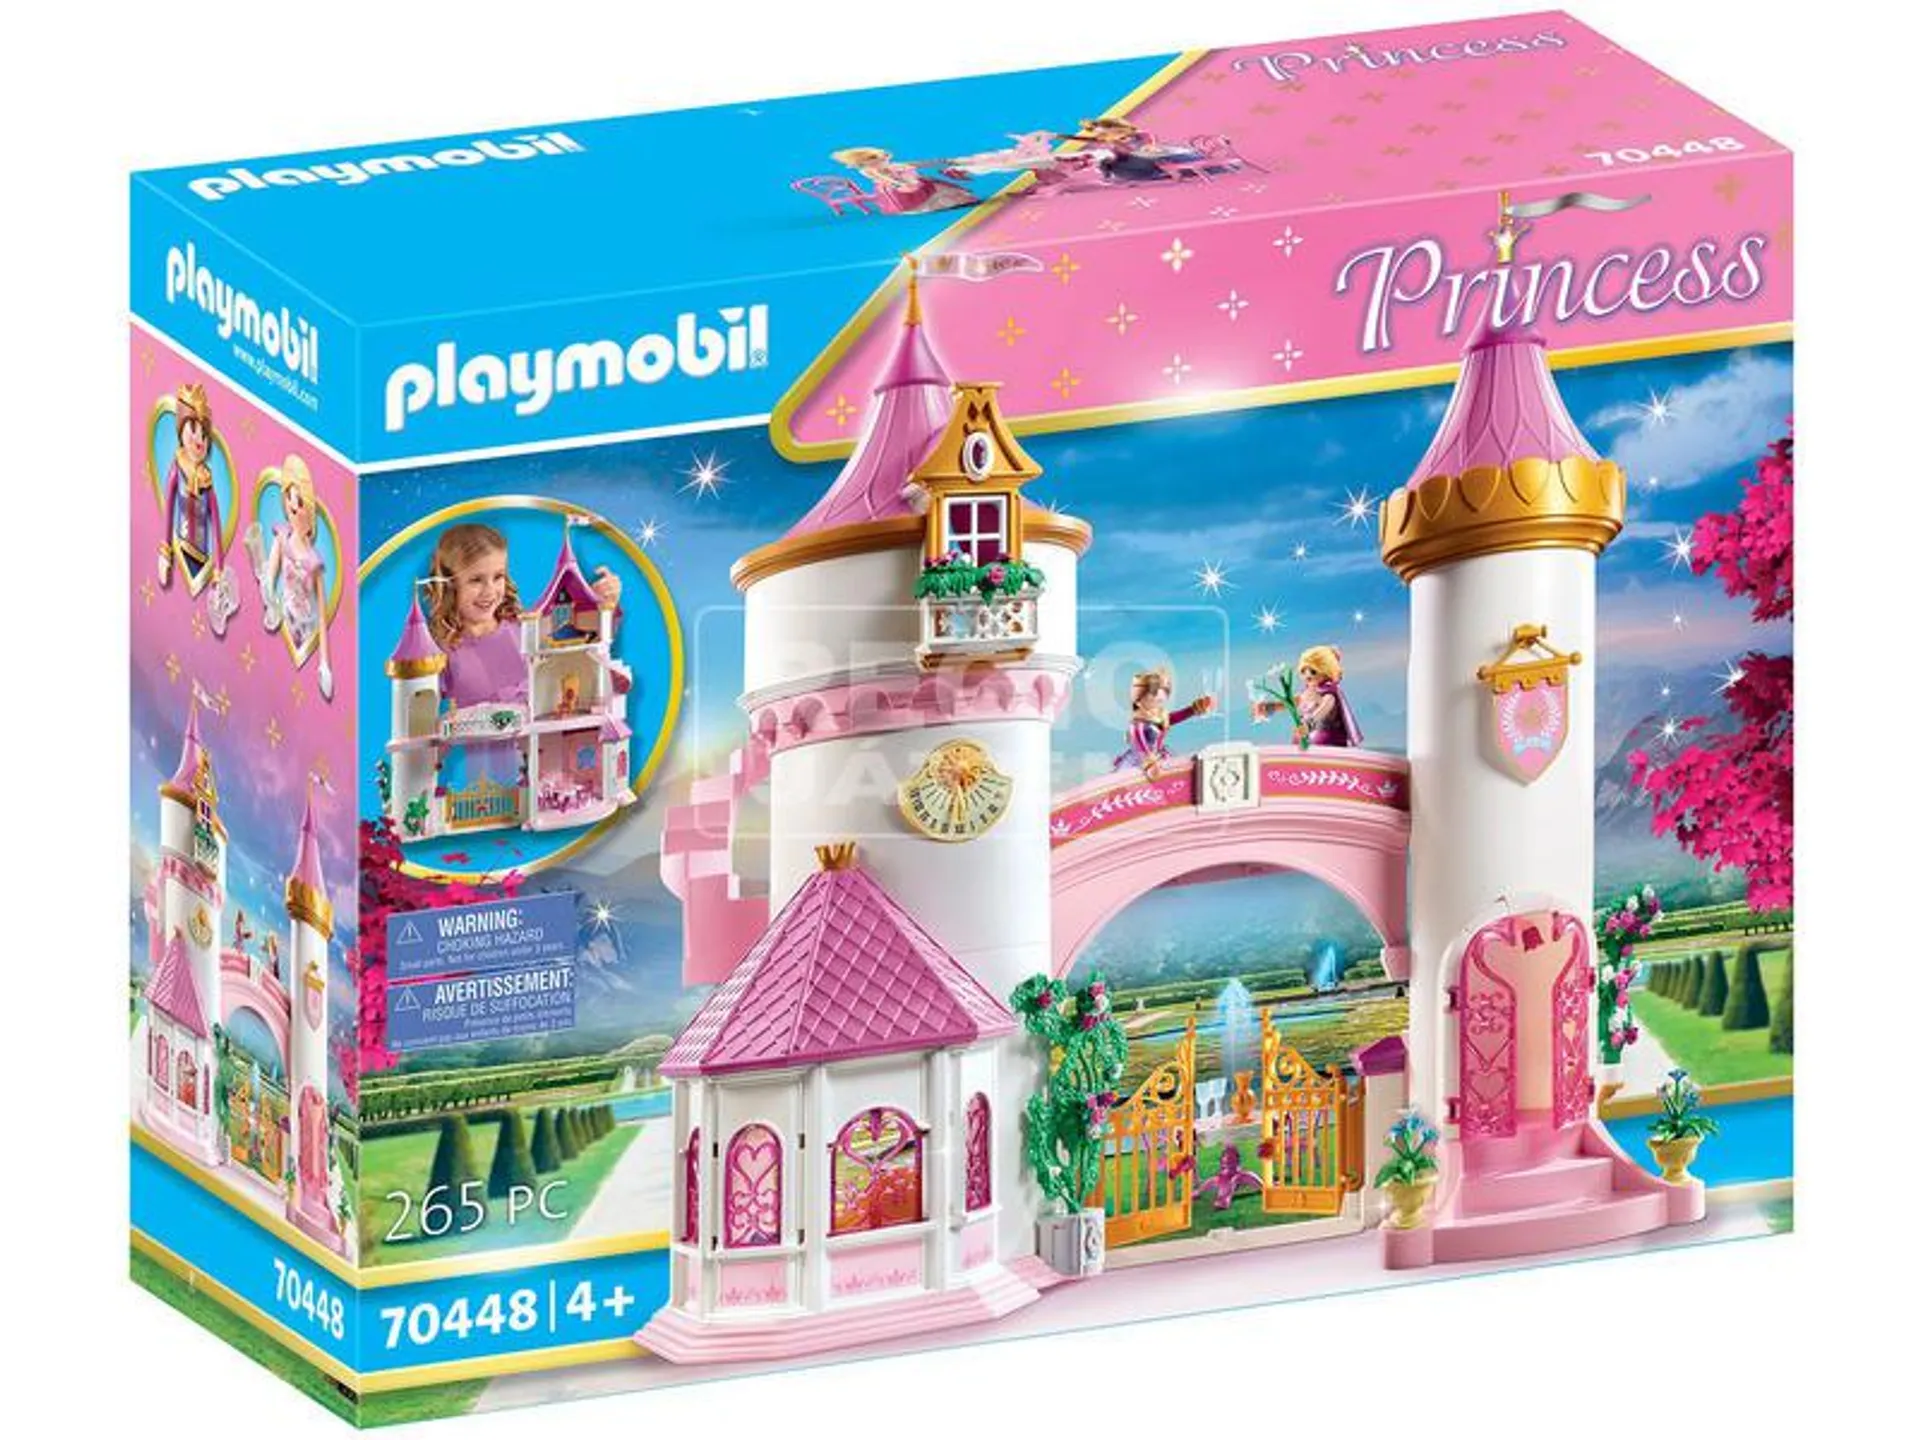 Playmobil hercegnő kastély 70448